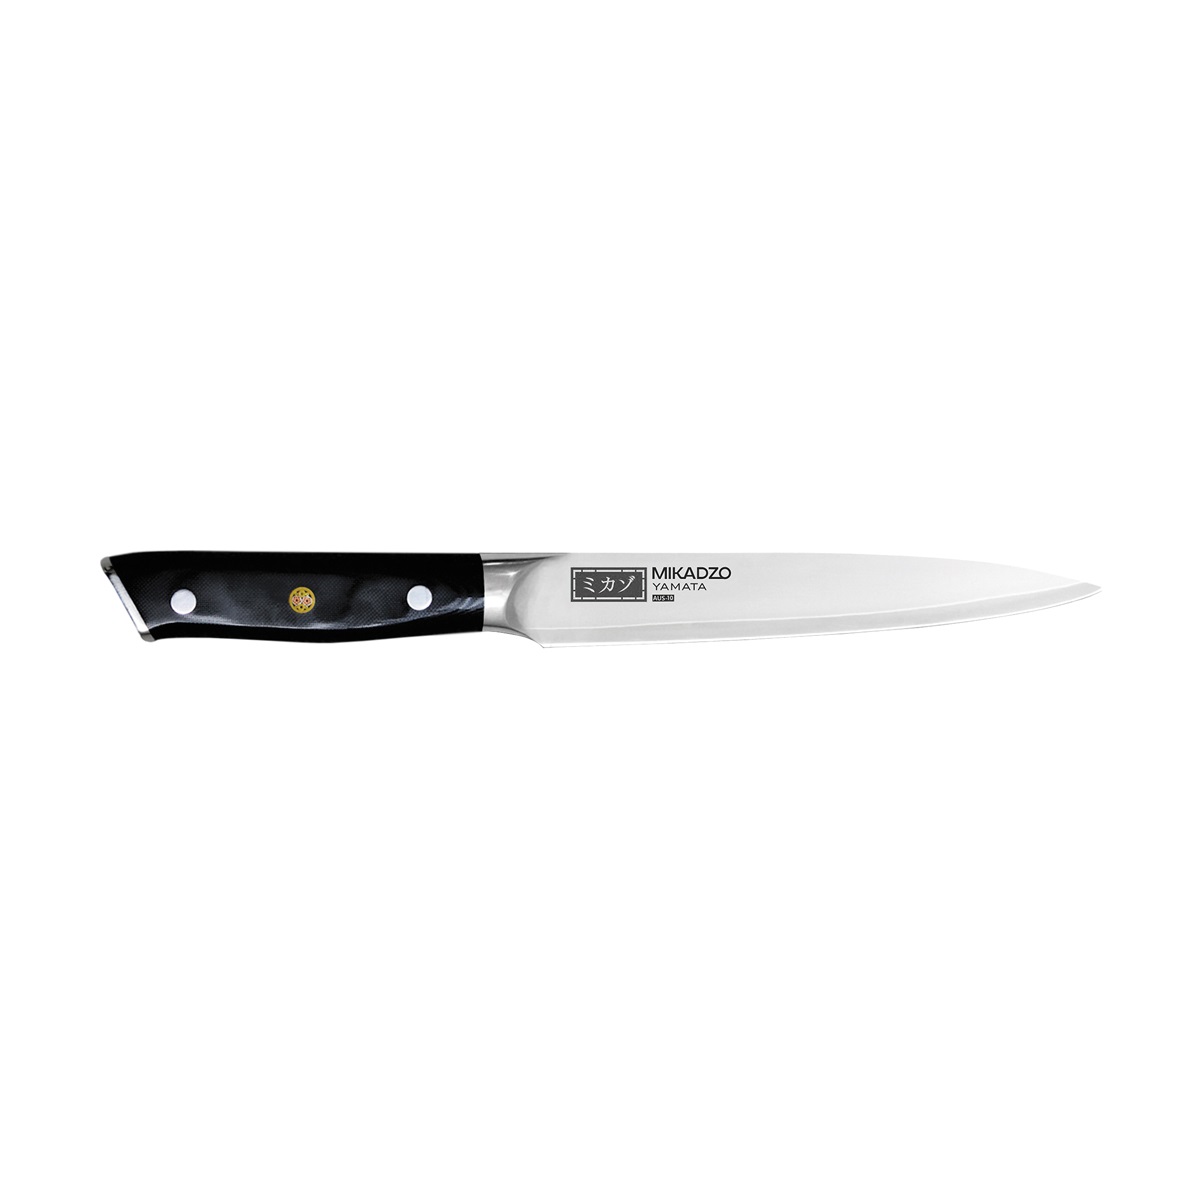 Кухонный нож Omoikiri Micadzo Yamata YK-01-59-PA-89 кухонный гаджет ownland m 791 5 в 1